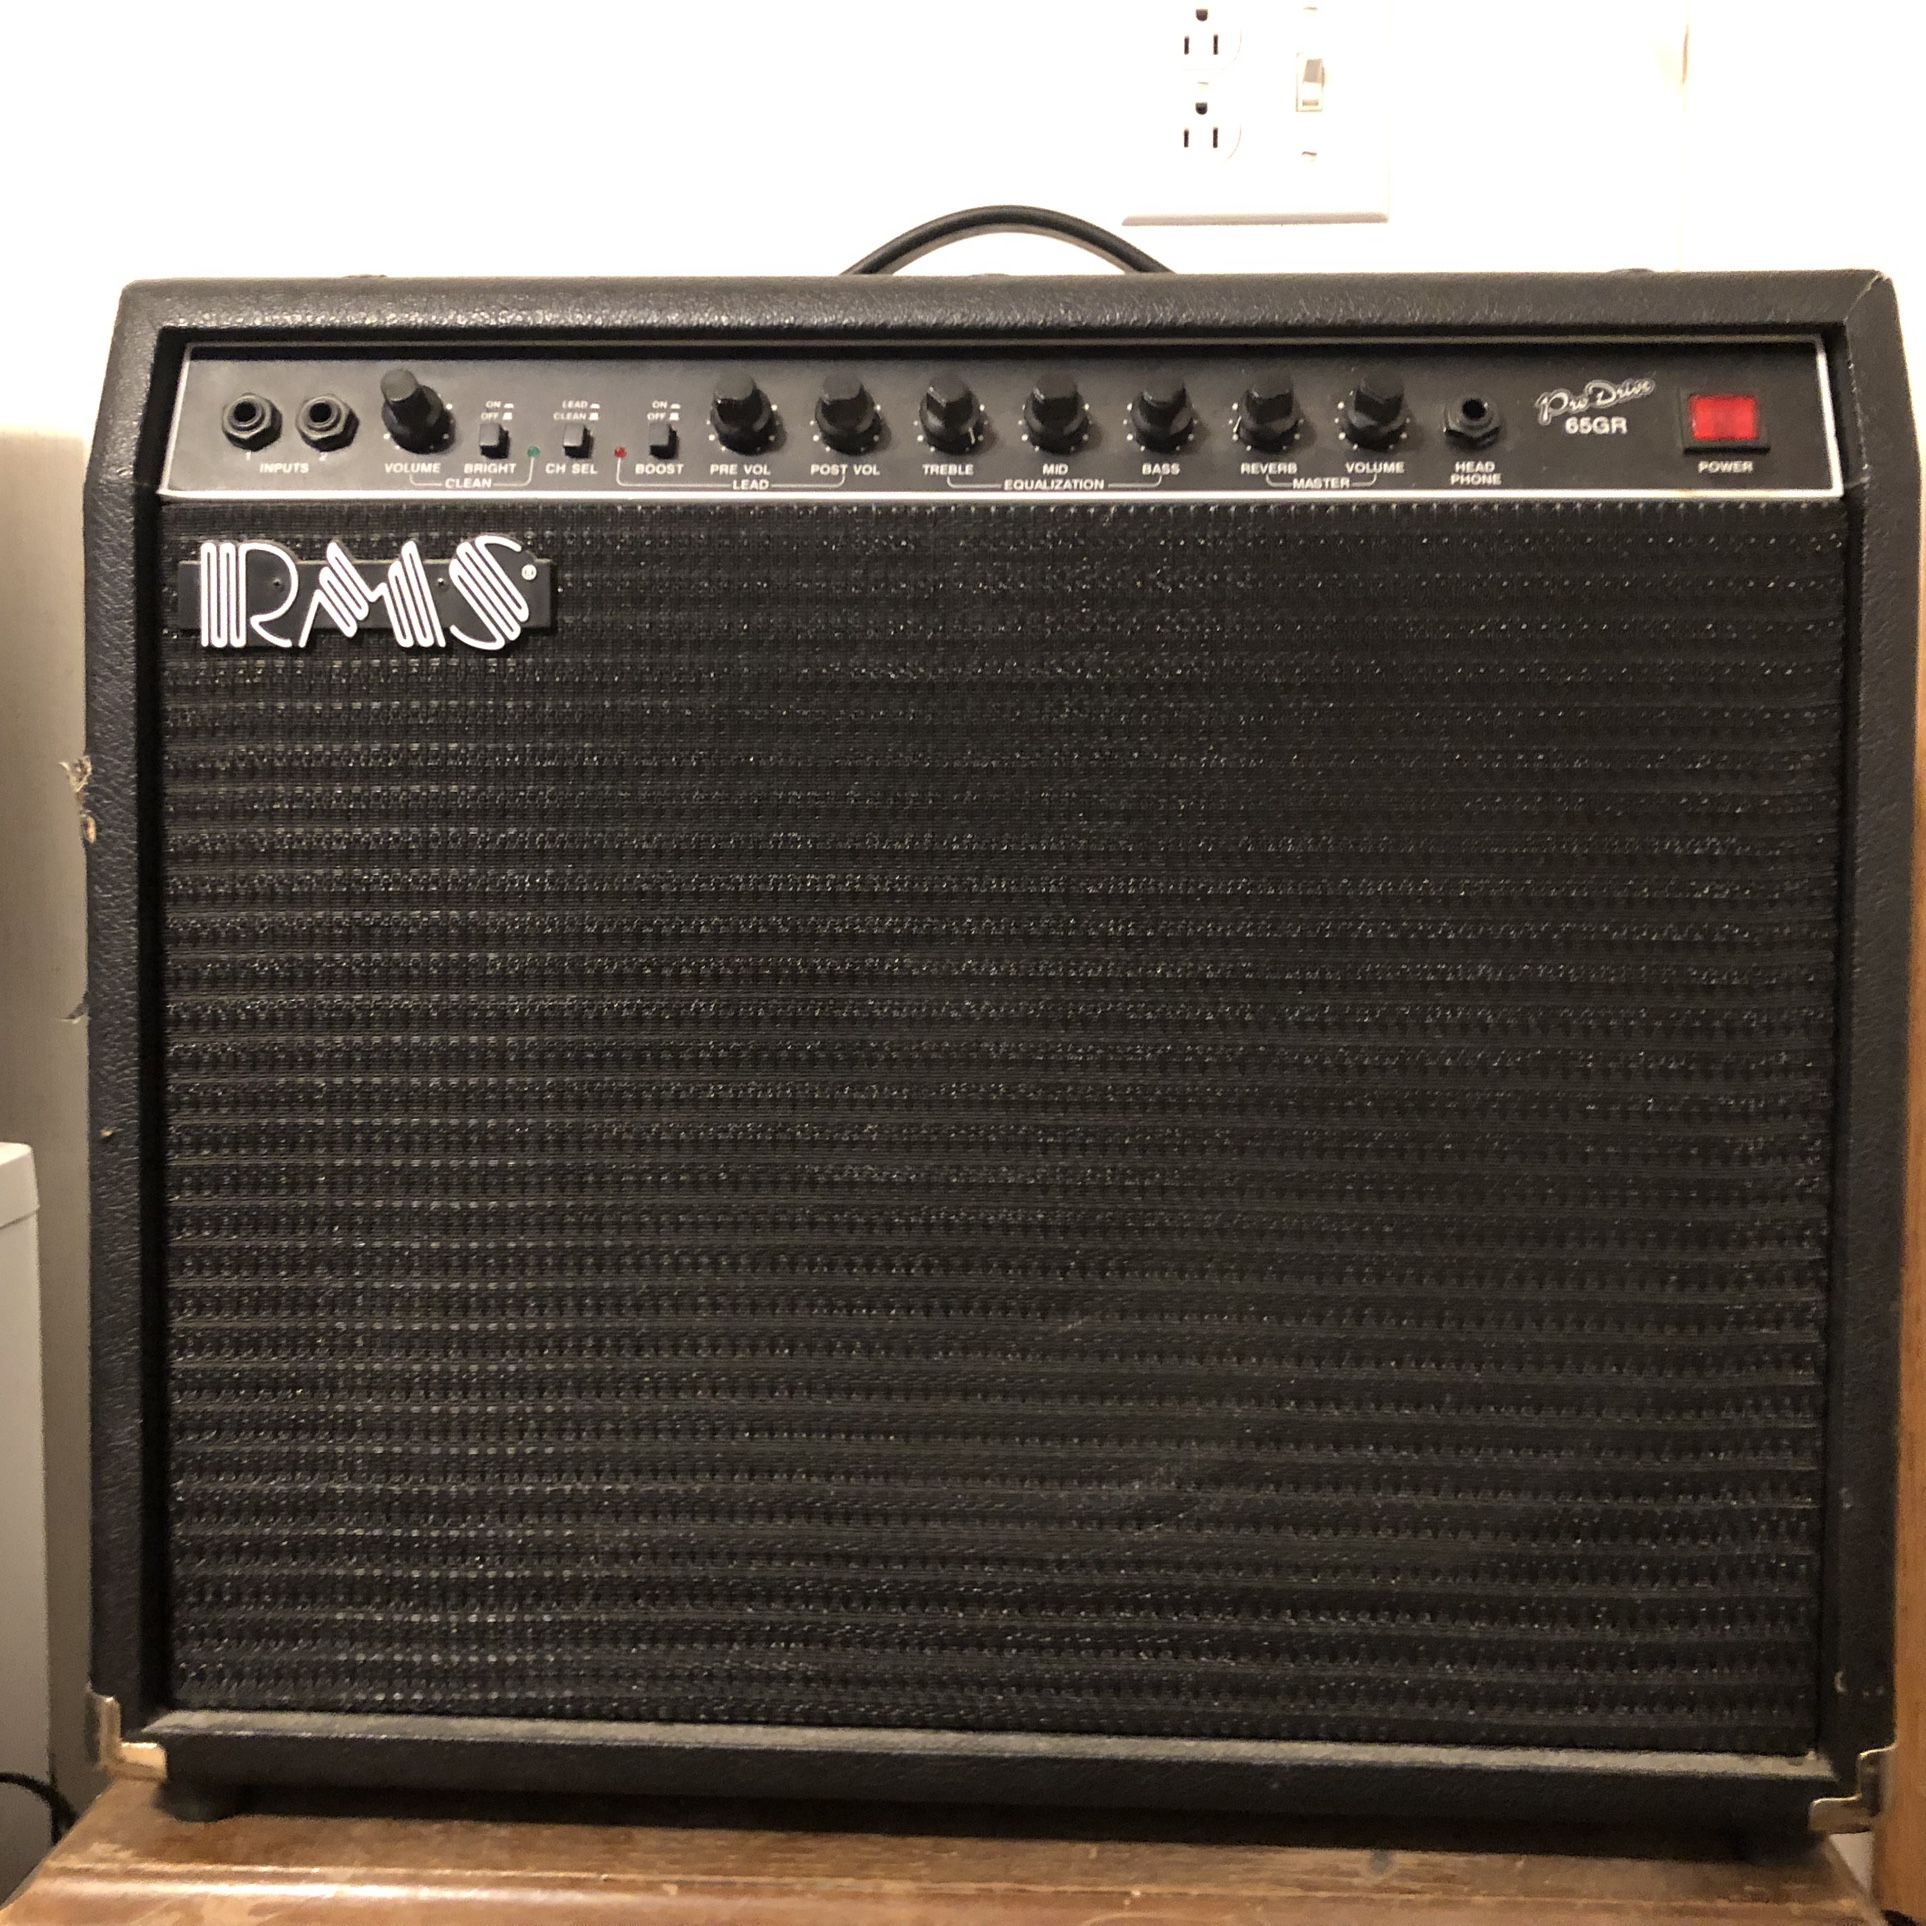 RMS ProDrive 65GR Guitar Amplifier